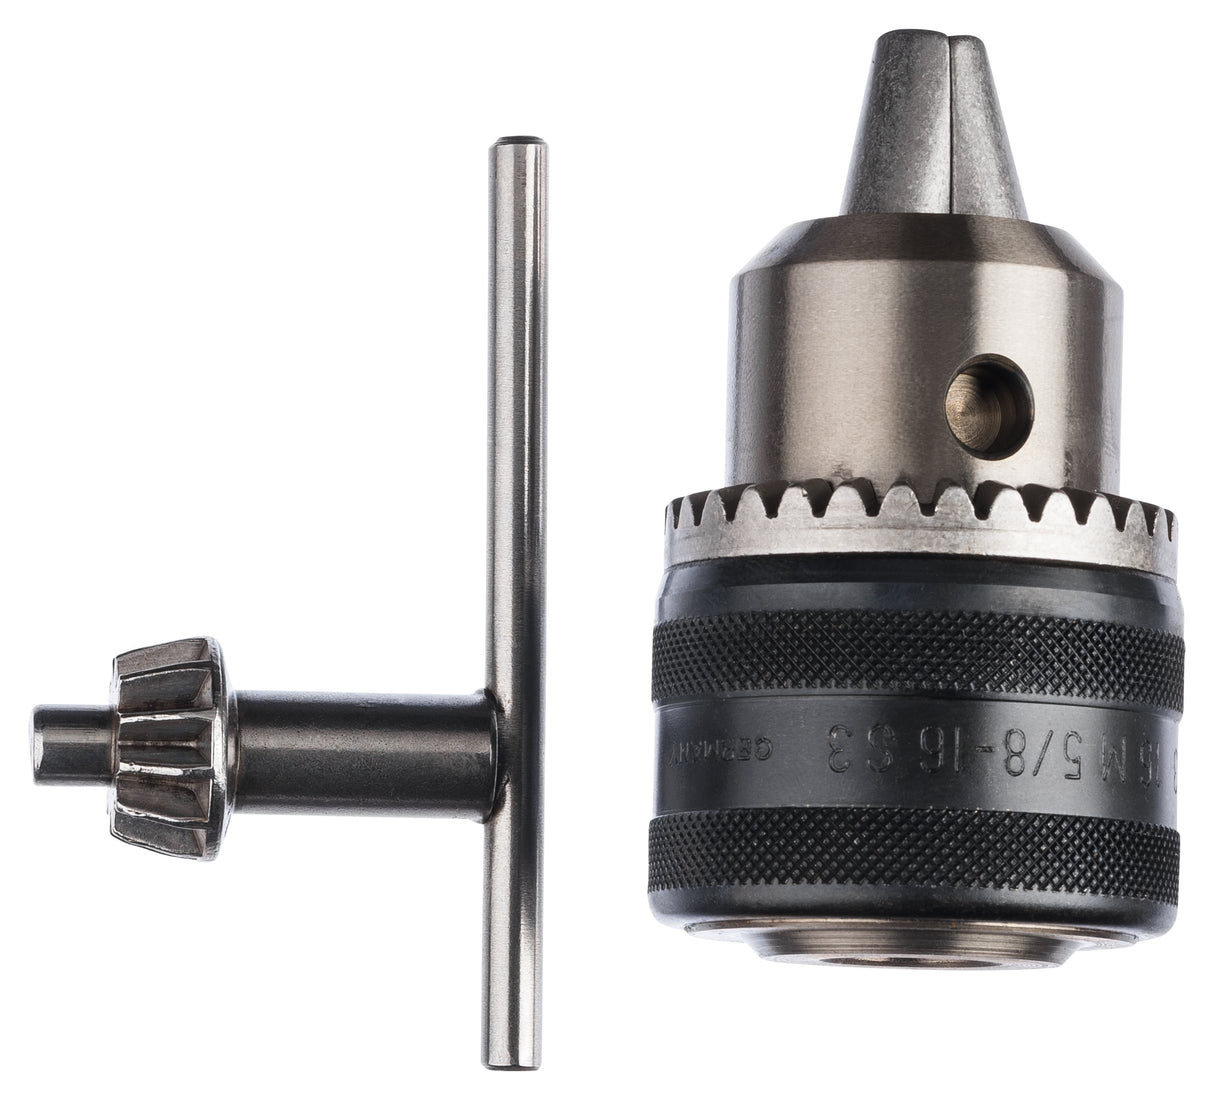 Bosch Professional Keyed Chucks up to 16mm (3-16mm, 5/8-16)